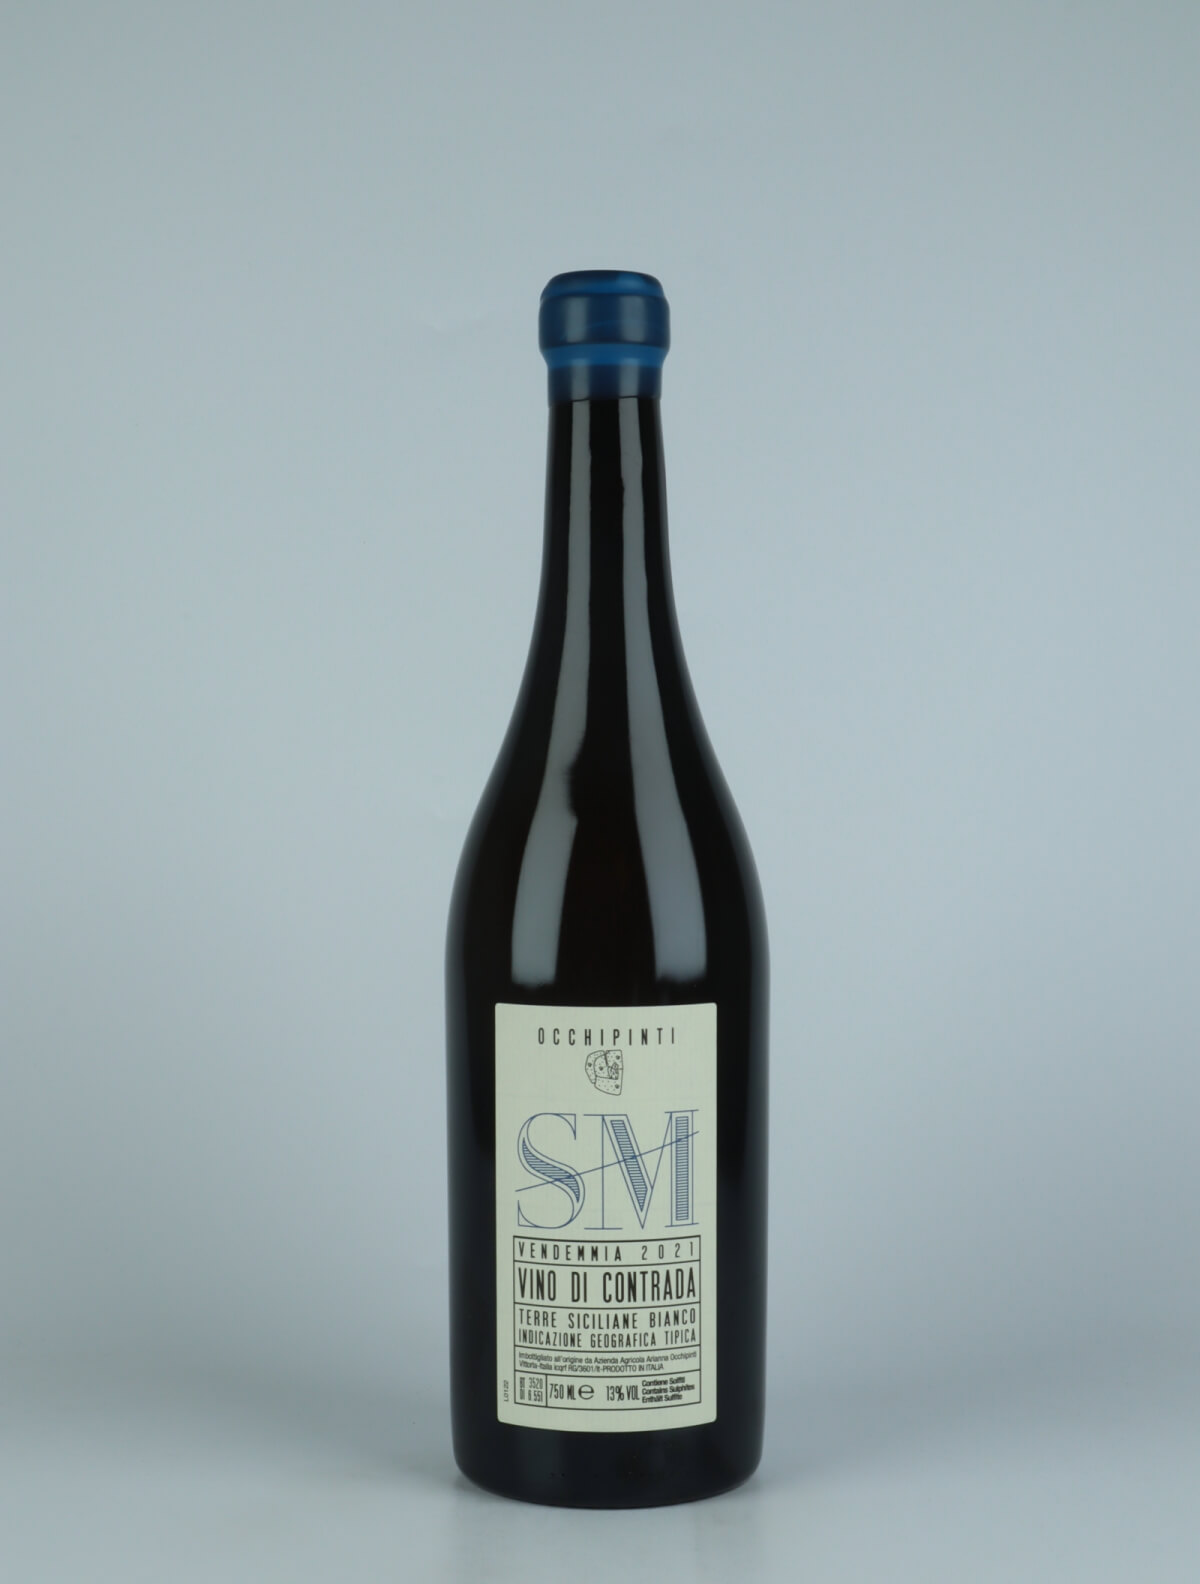 A bottle 2021 Santa Margherita White wine from Arianna Occhipinti, Sicily in Italy